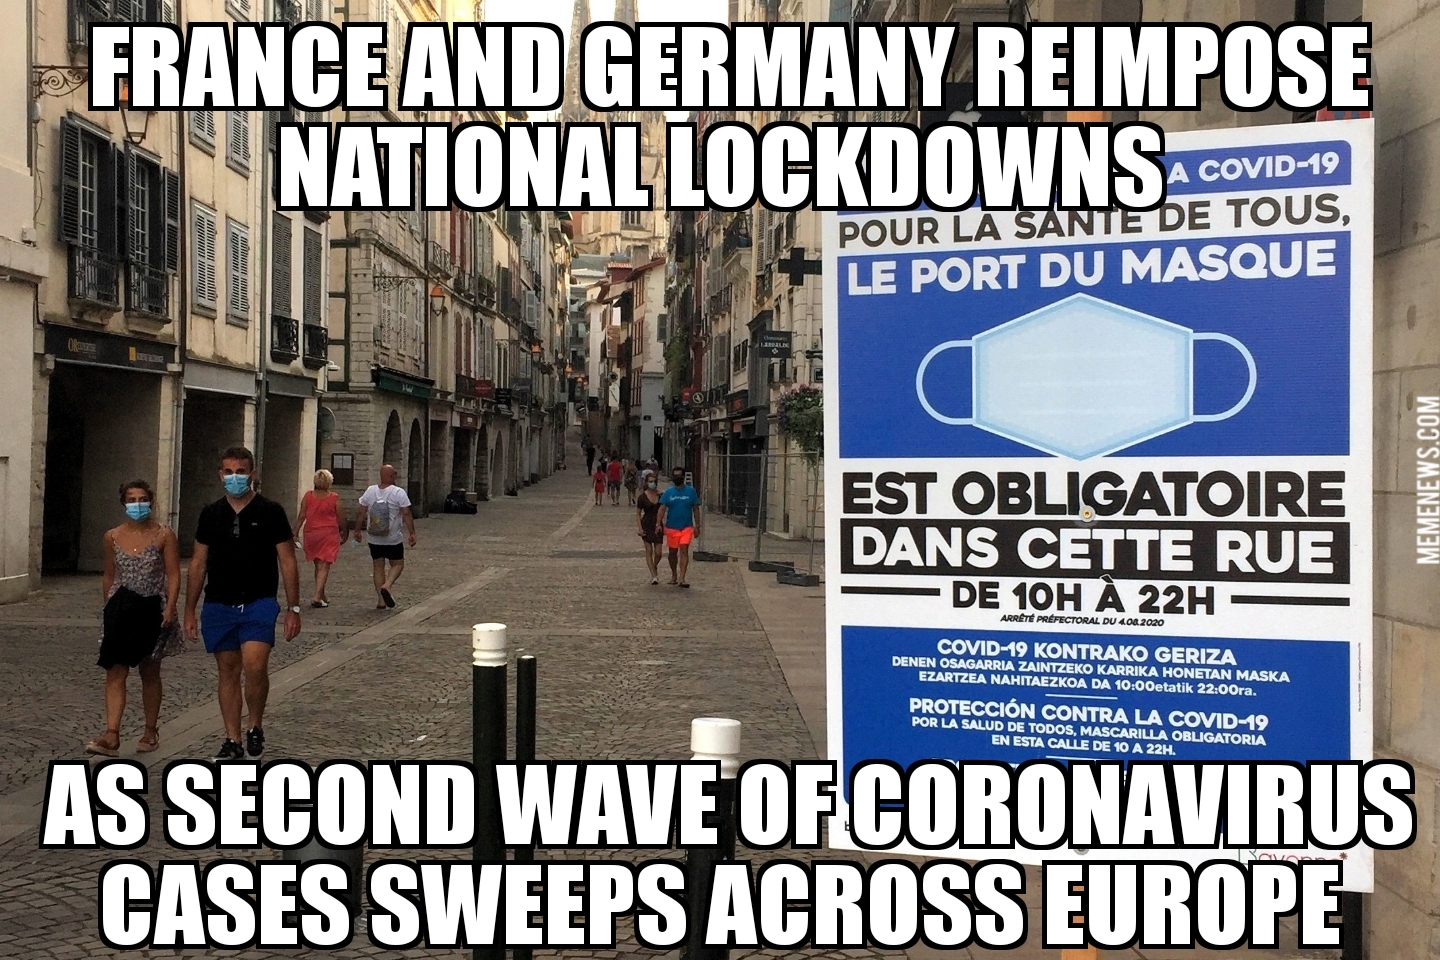 France and Germany reimpose coronavirus lockdowns